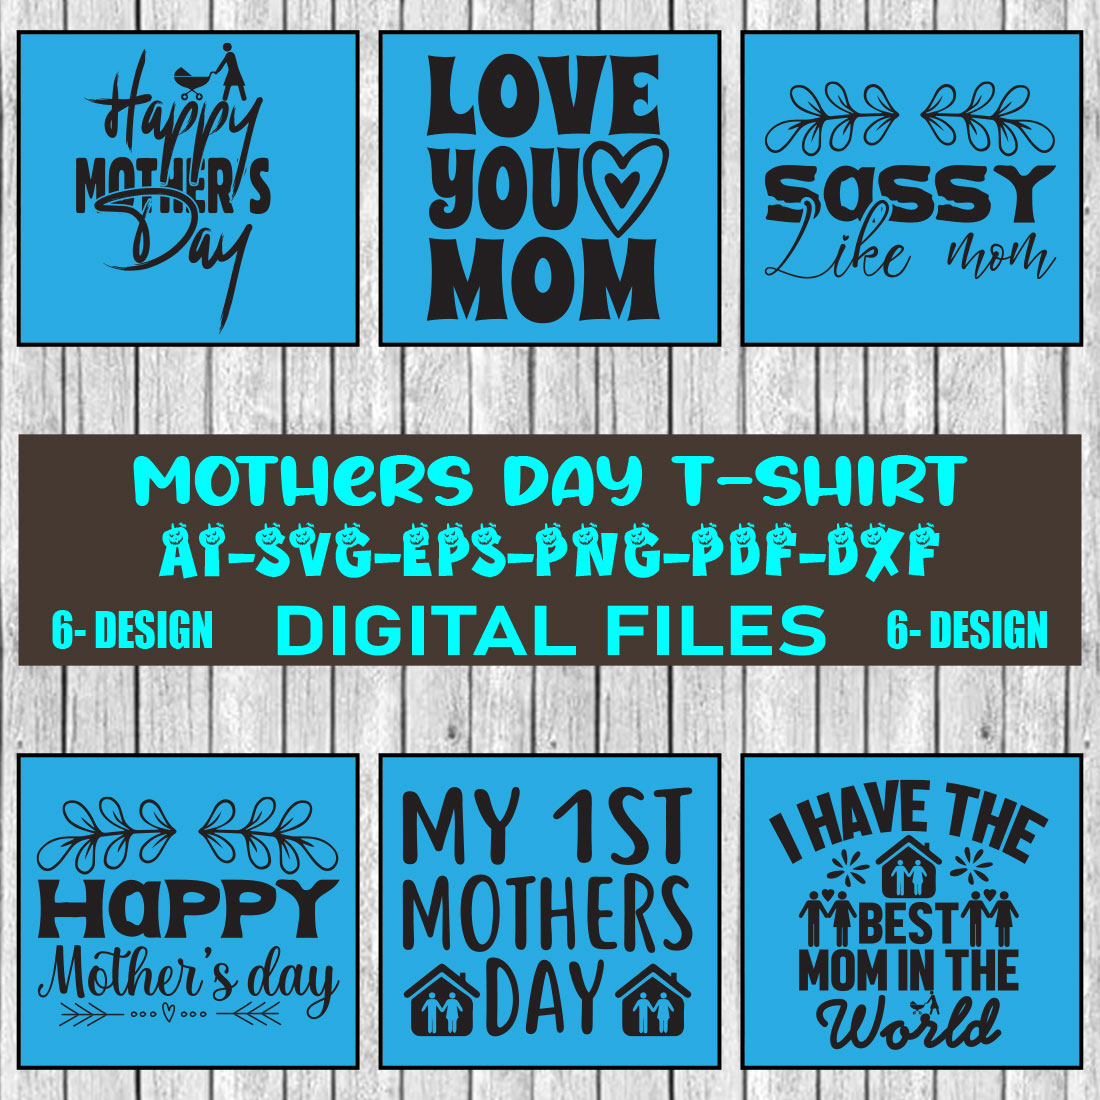 Mothers Day T-shirt Design Bundle Vol-06 cover image.